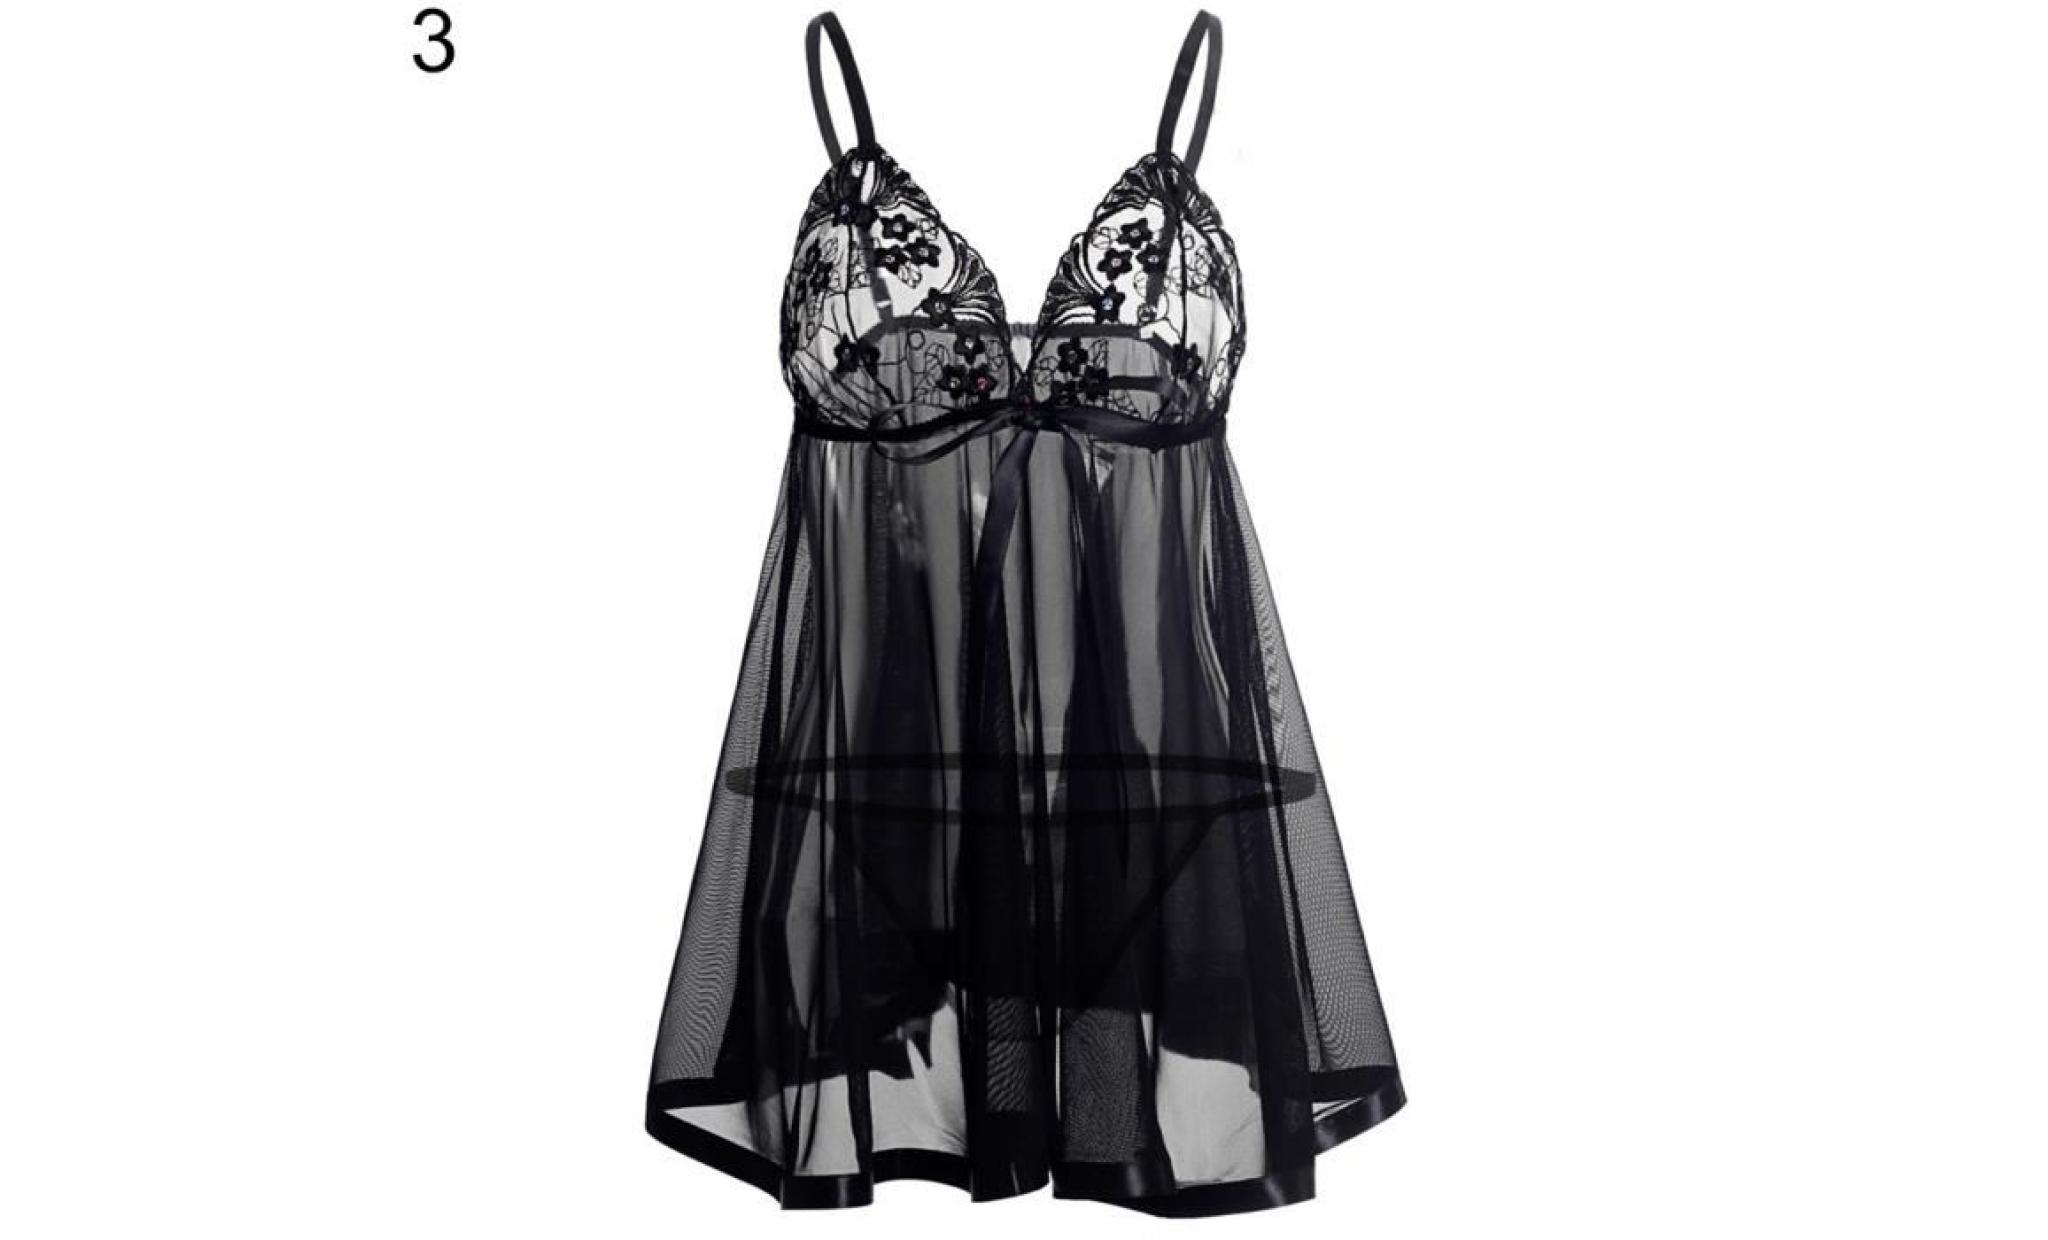 robe en dentelle transparente transparente à lacets pour femmes throng sleepwear nightwear black xxxxl